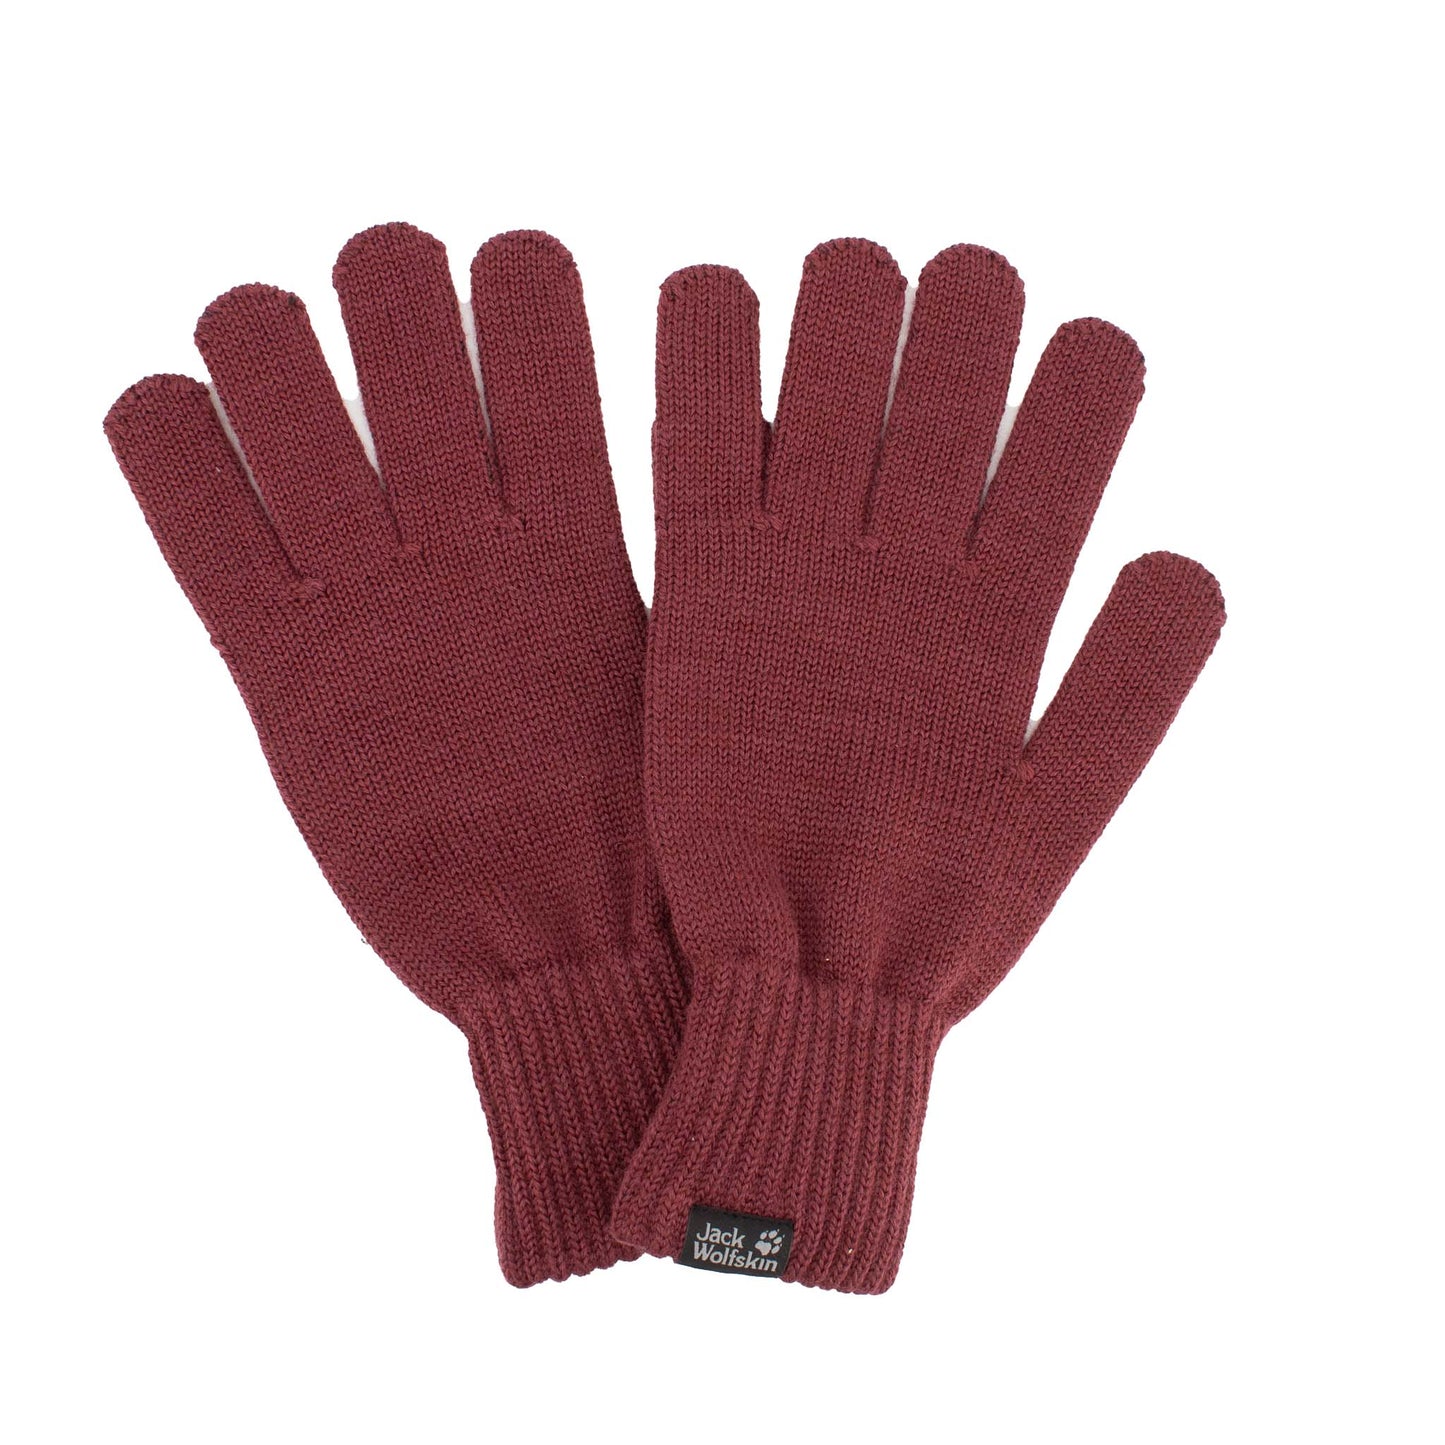 Jack Wolfskin Milton Glove Handschuhe Strickhandschuhe 1905142-2740